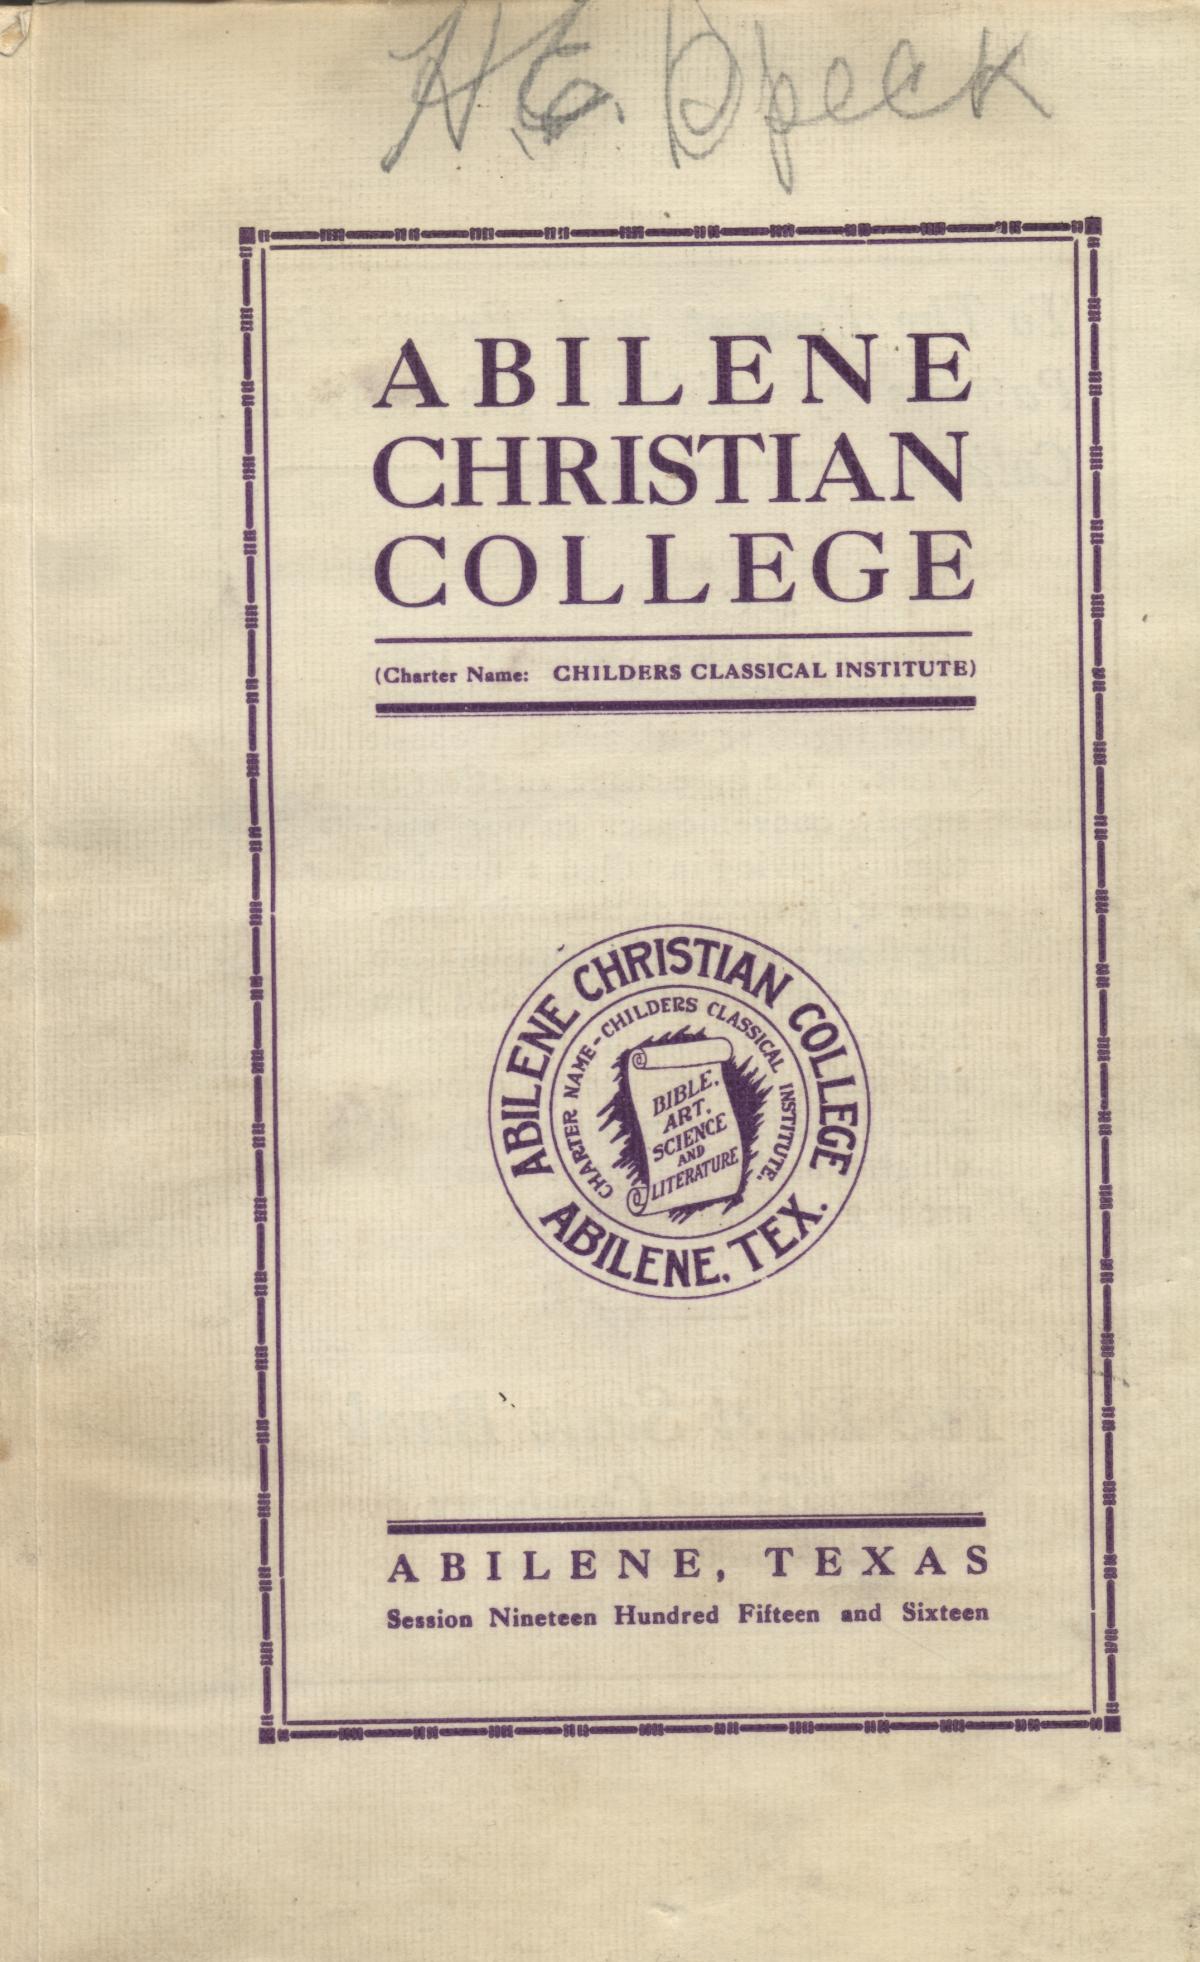 Catalog of Abilene Christian College, 1915-1916
                                                
                                                    [Sequence #]: 1 of 78
                                                